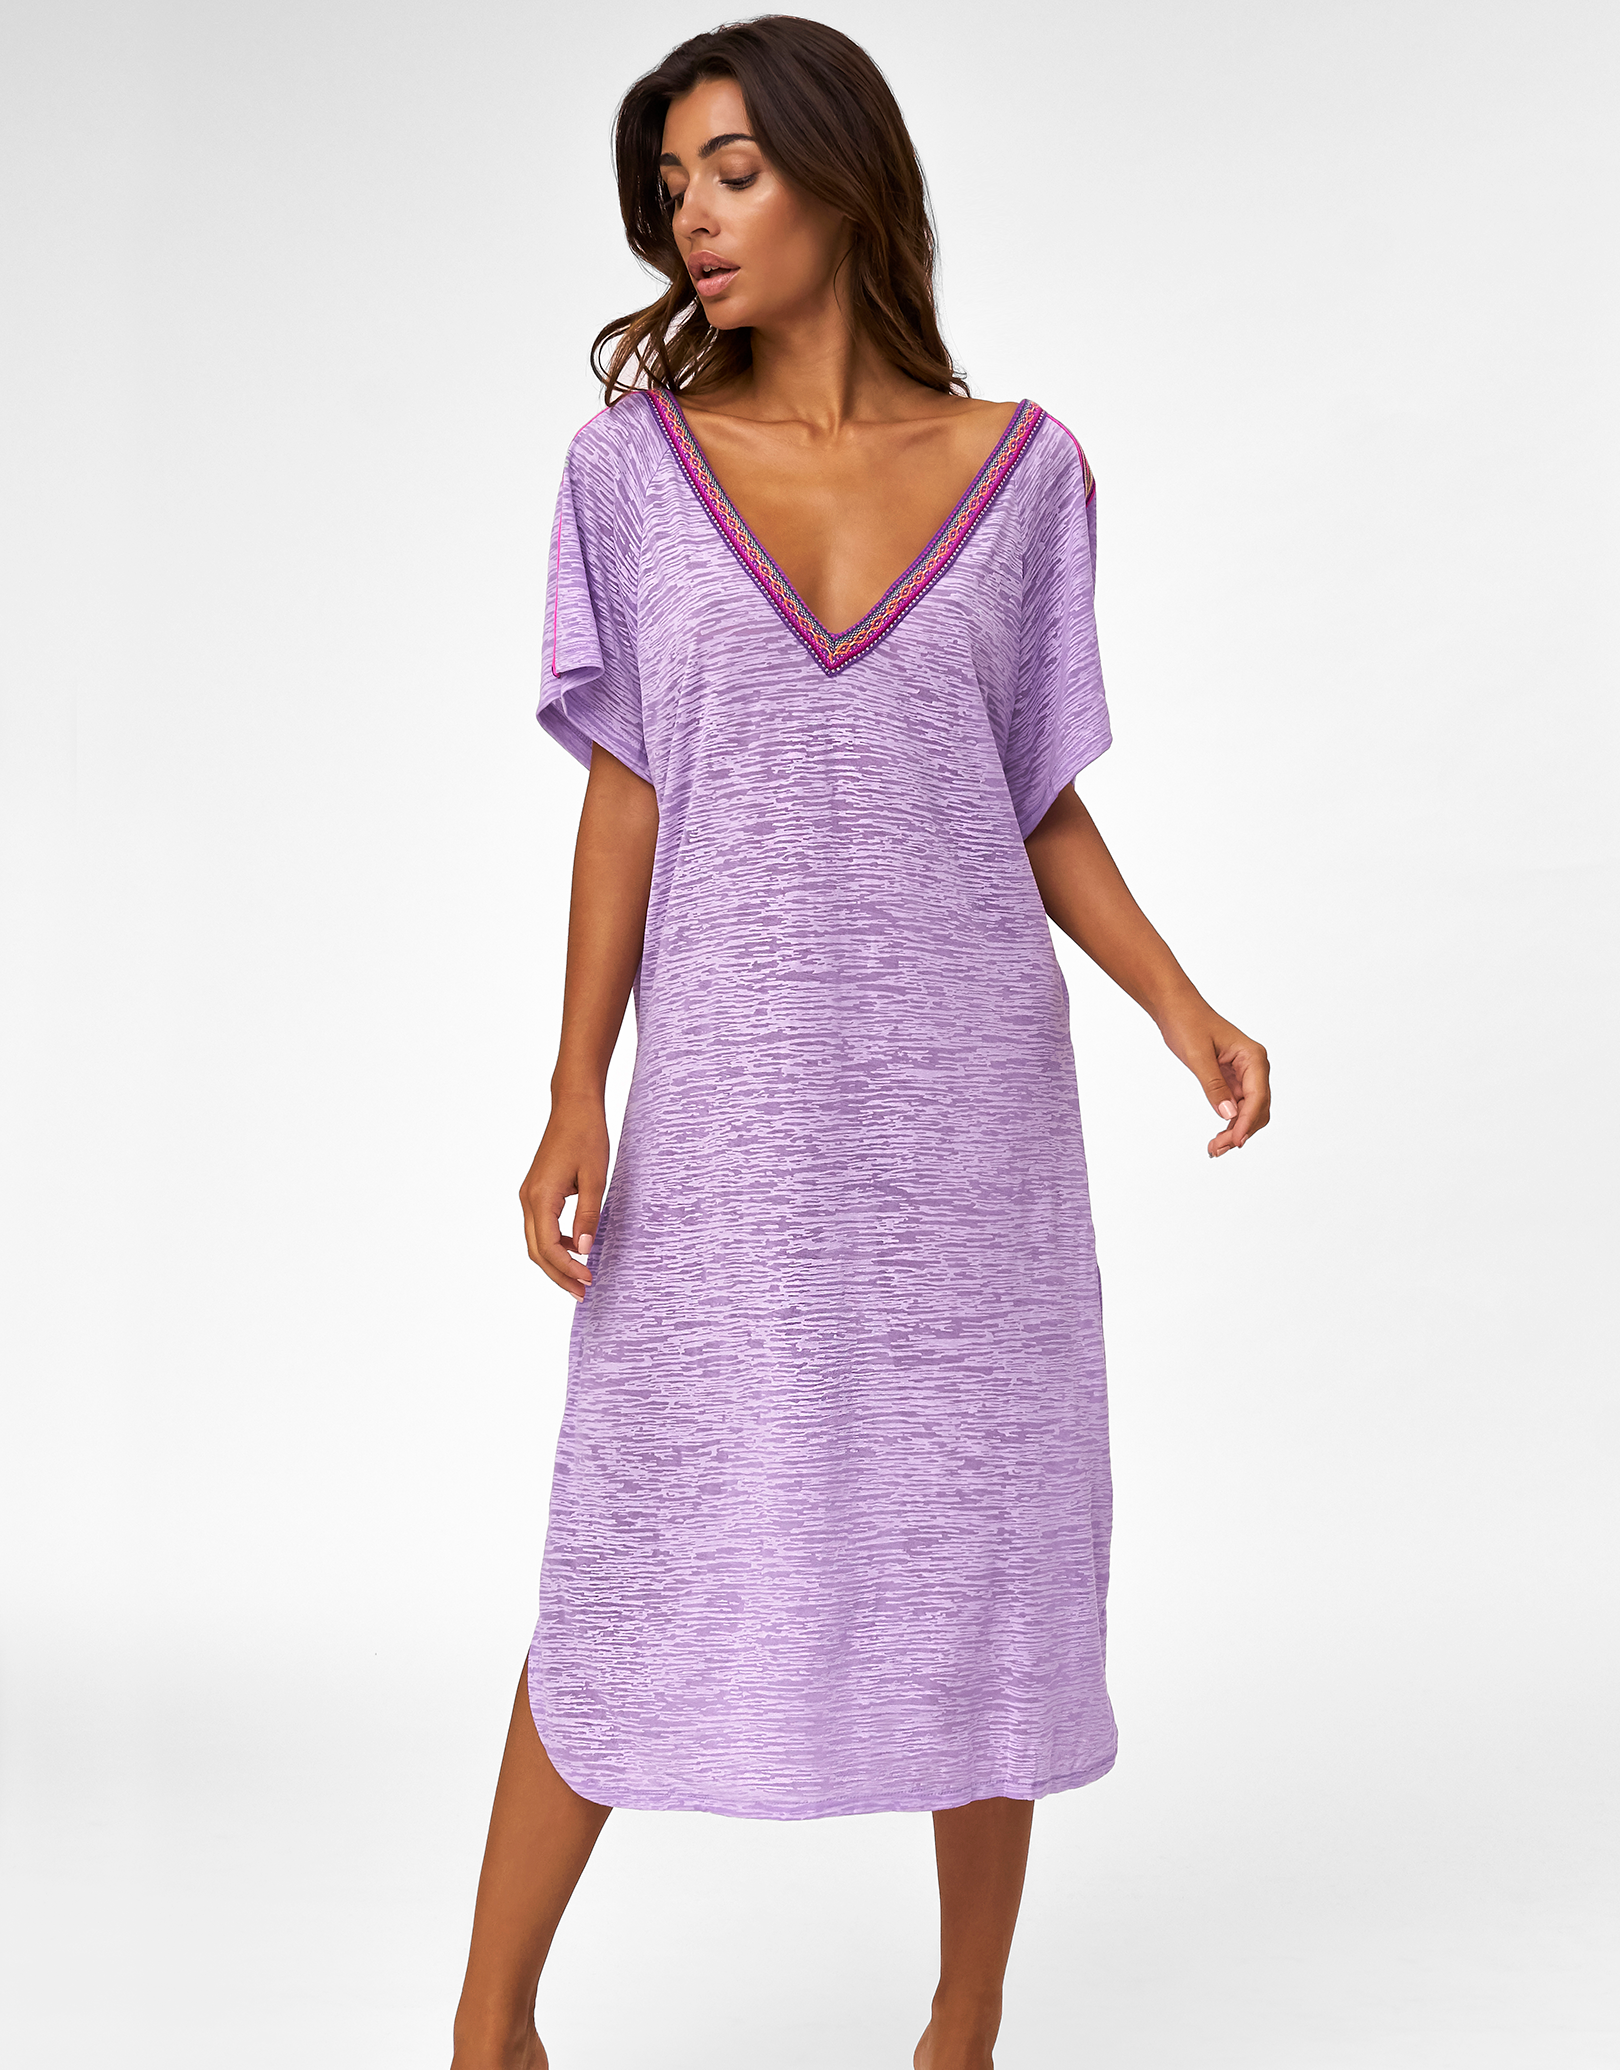 V Back Dress - Lavender